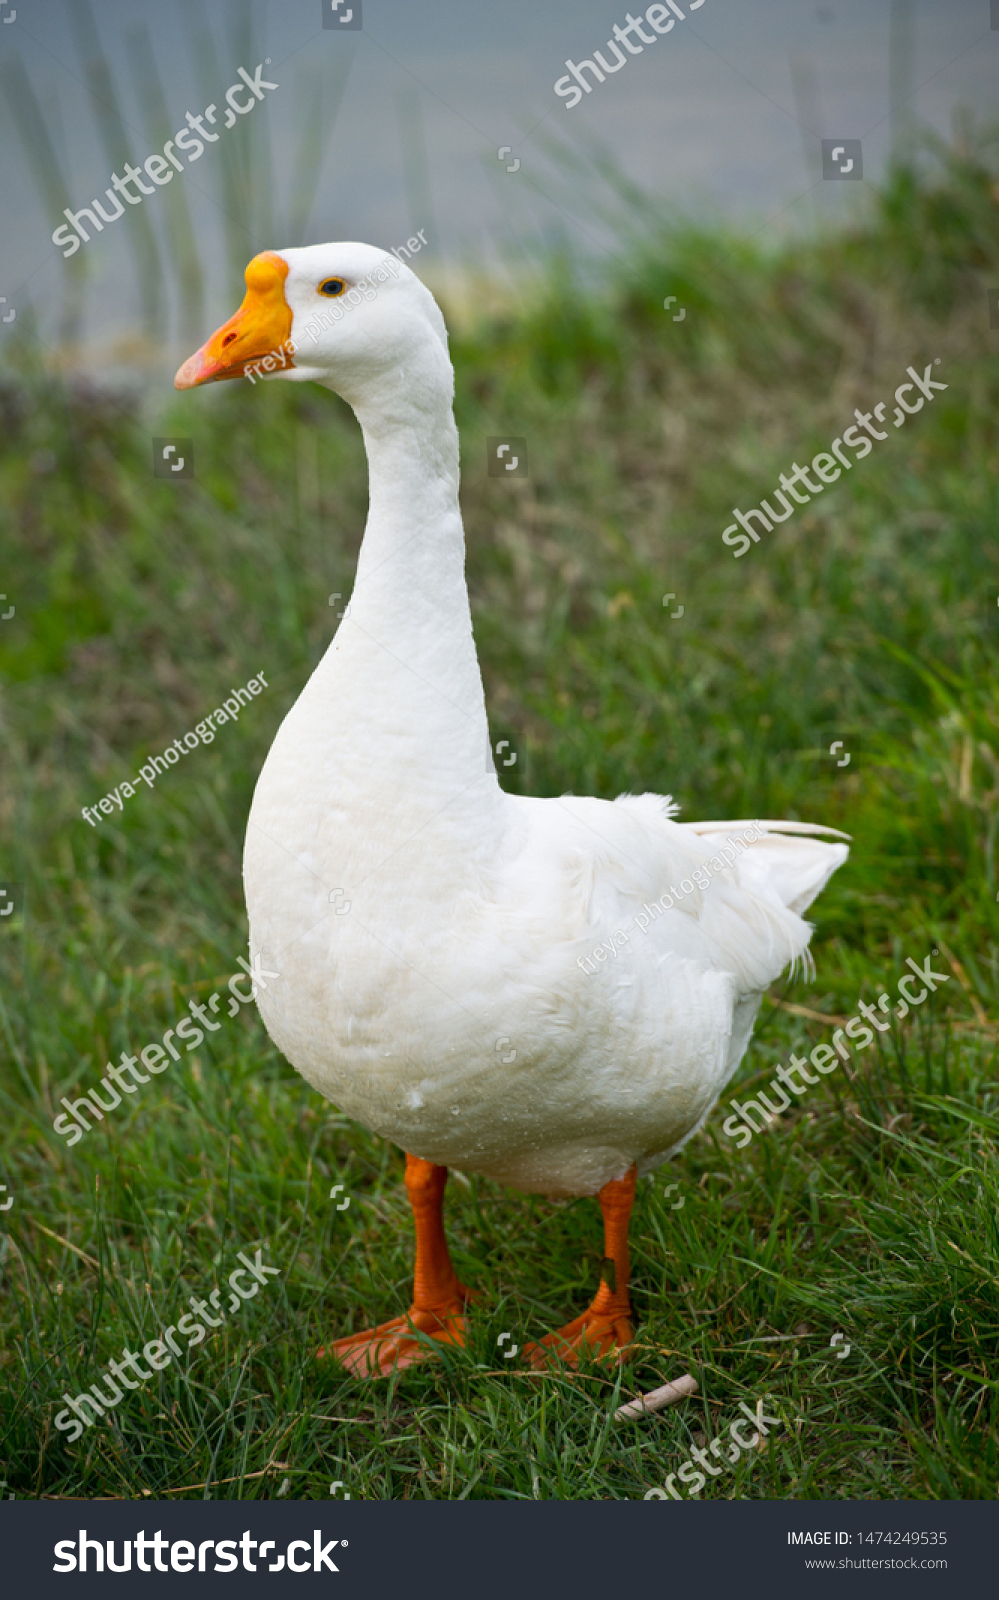 Domestic Goose, NatureRules1 Wiki